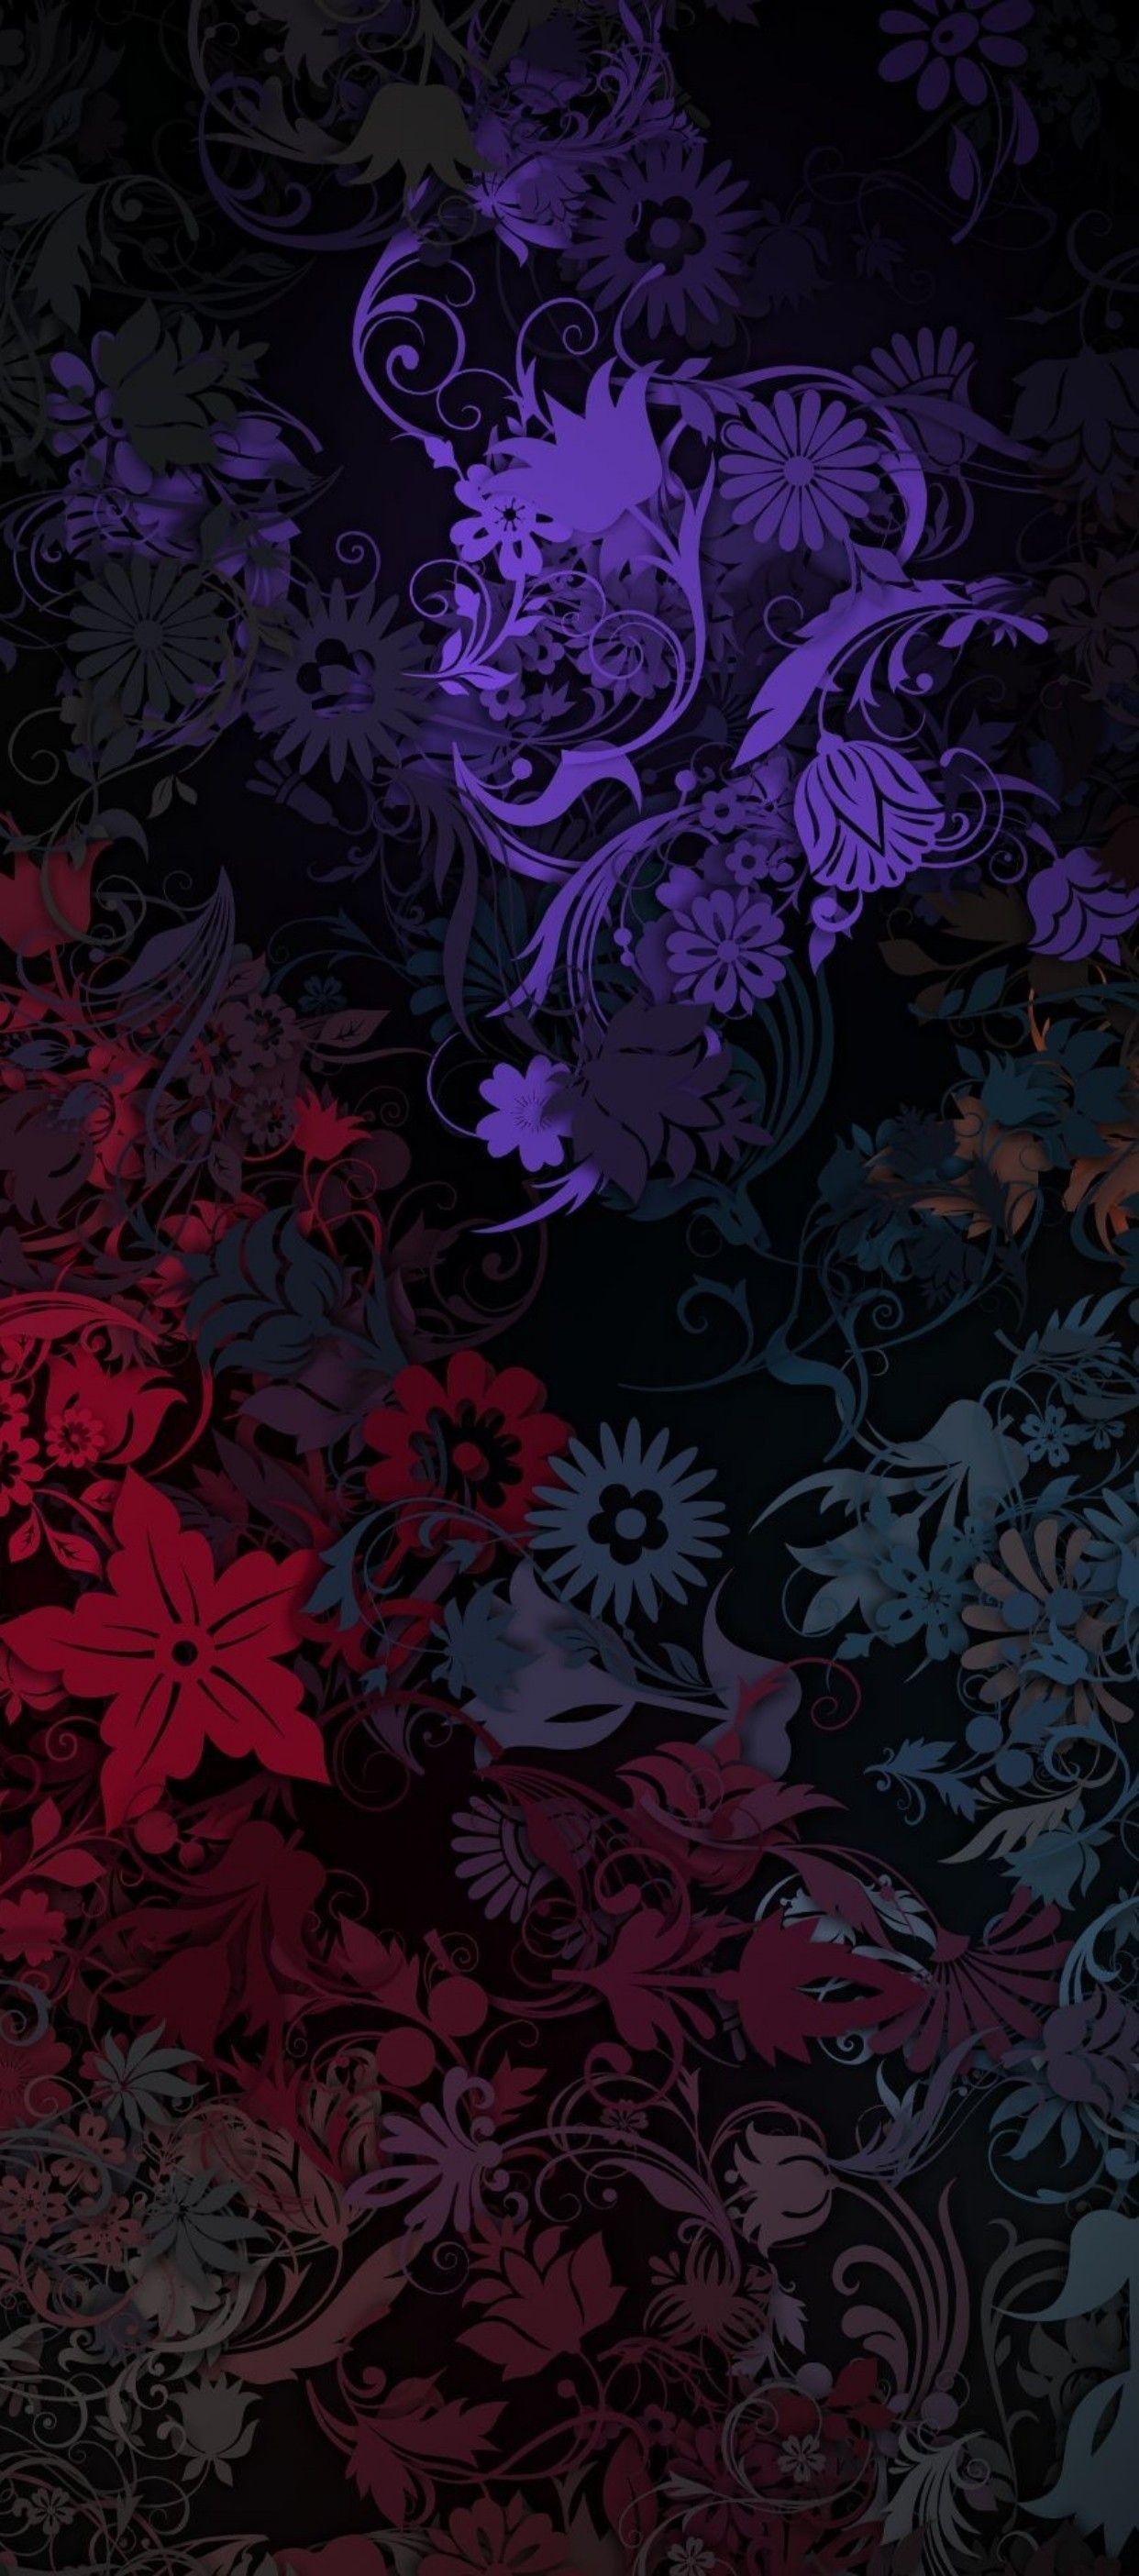 Dark Abstract IPhone X Wallpaper, More At /dark Abstract Iphone X. Vintage Flowers Wallpaper, Live Wallpaper Iphone, Live Wallpaper Iphone 7